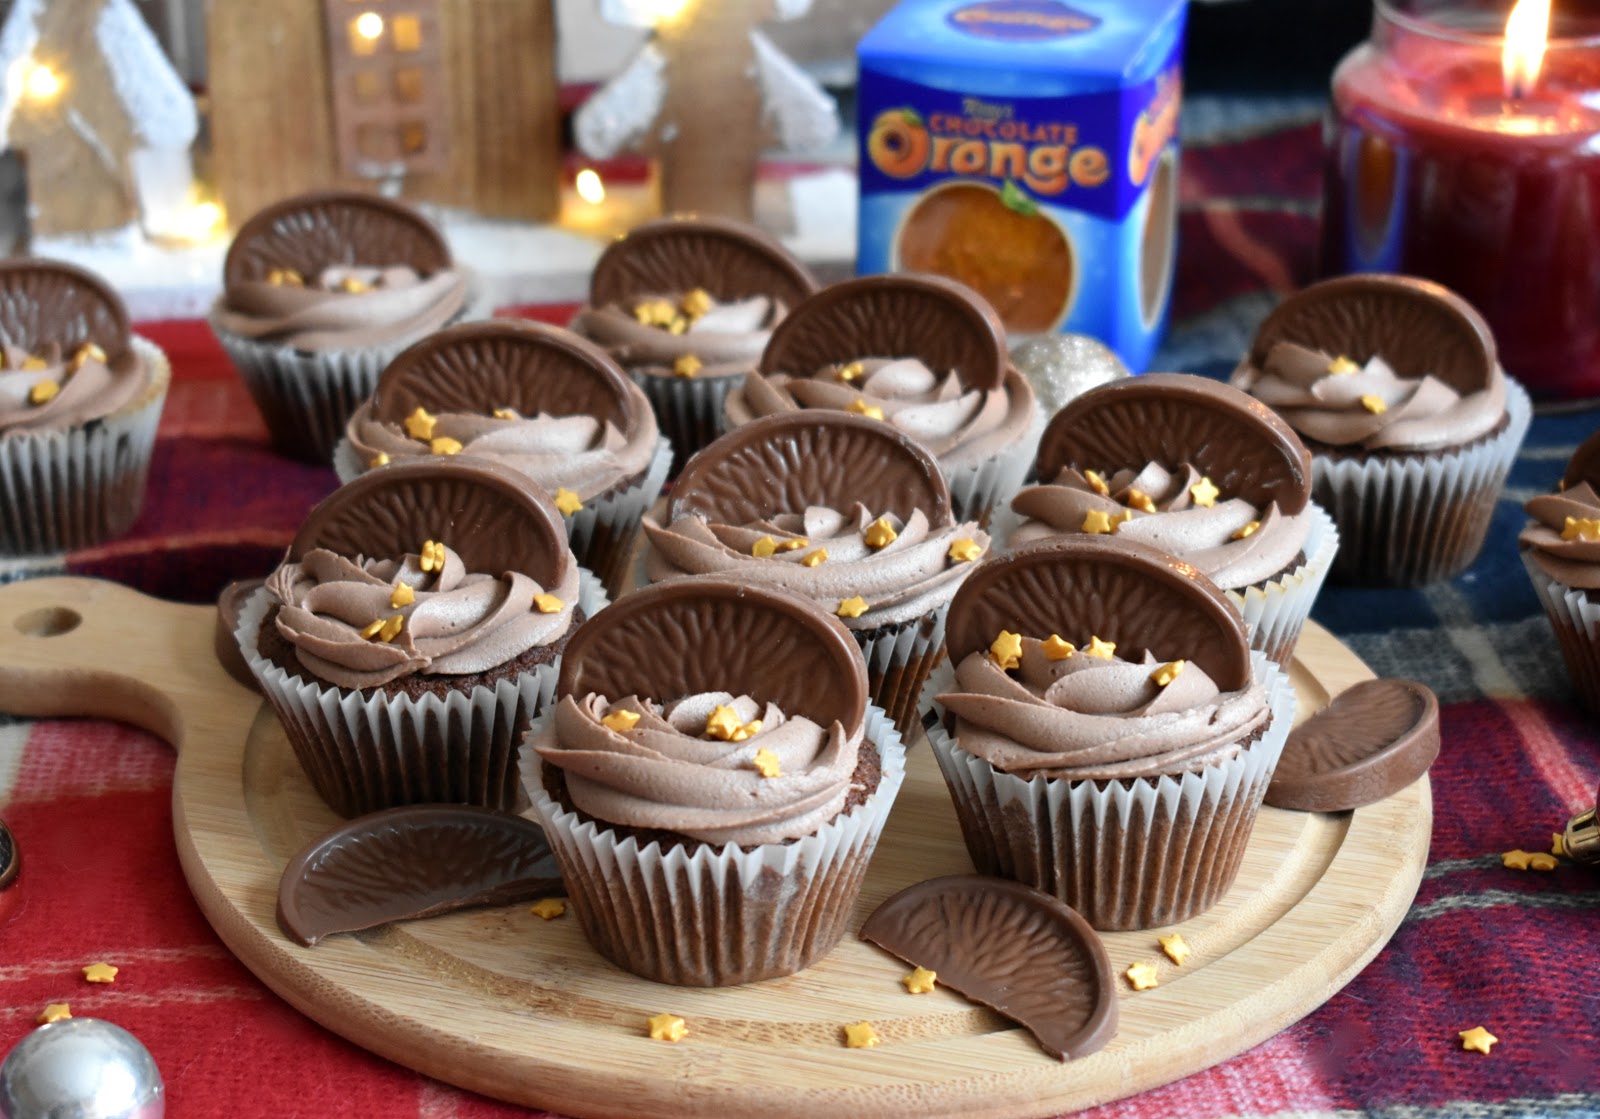 Terry's Chocolate Orange Cupcakes Recipe